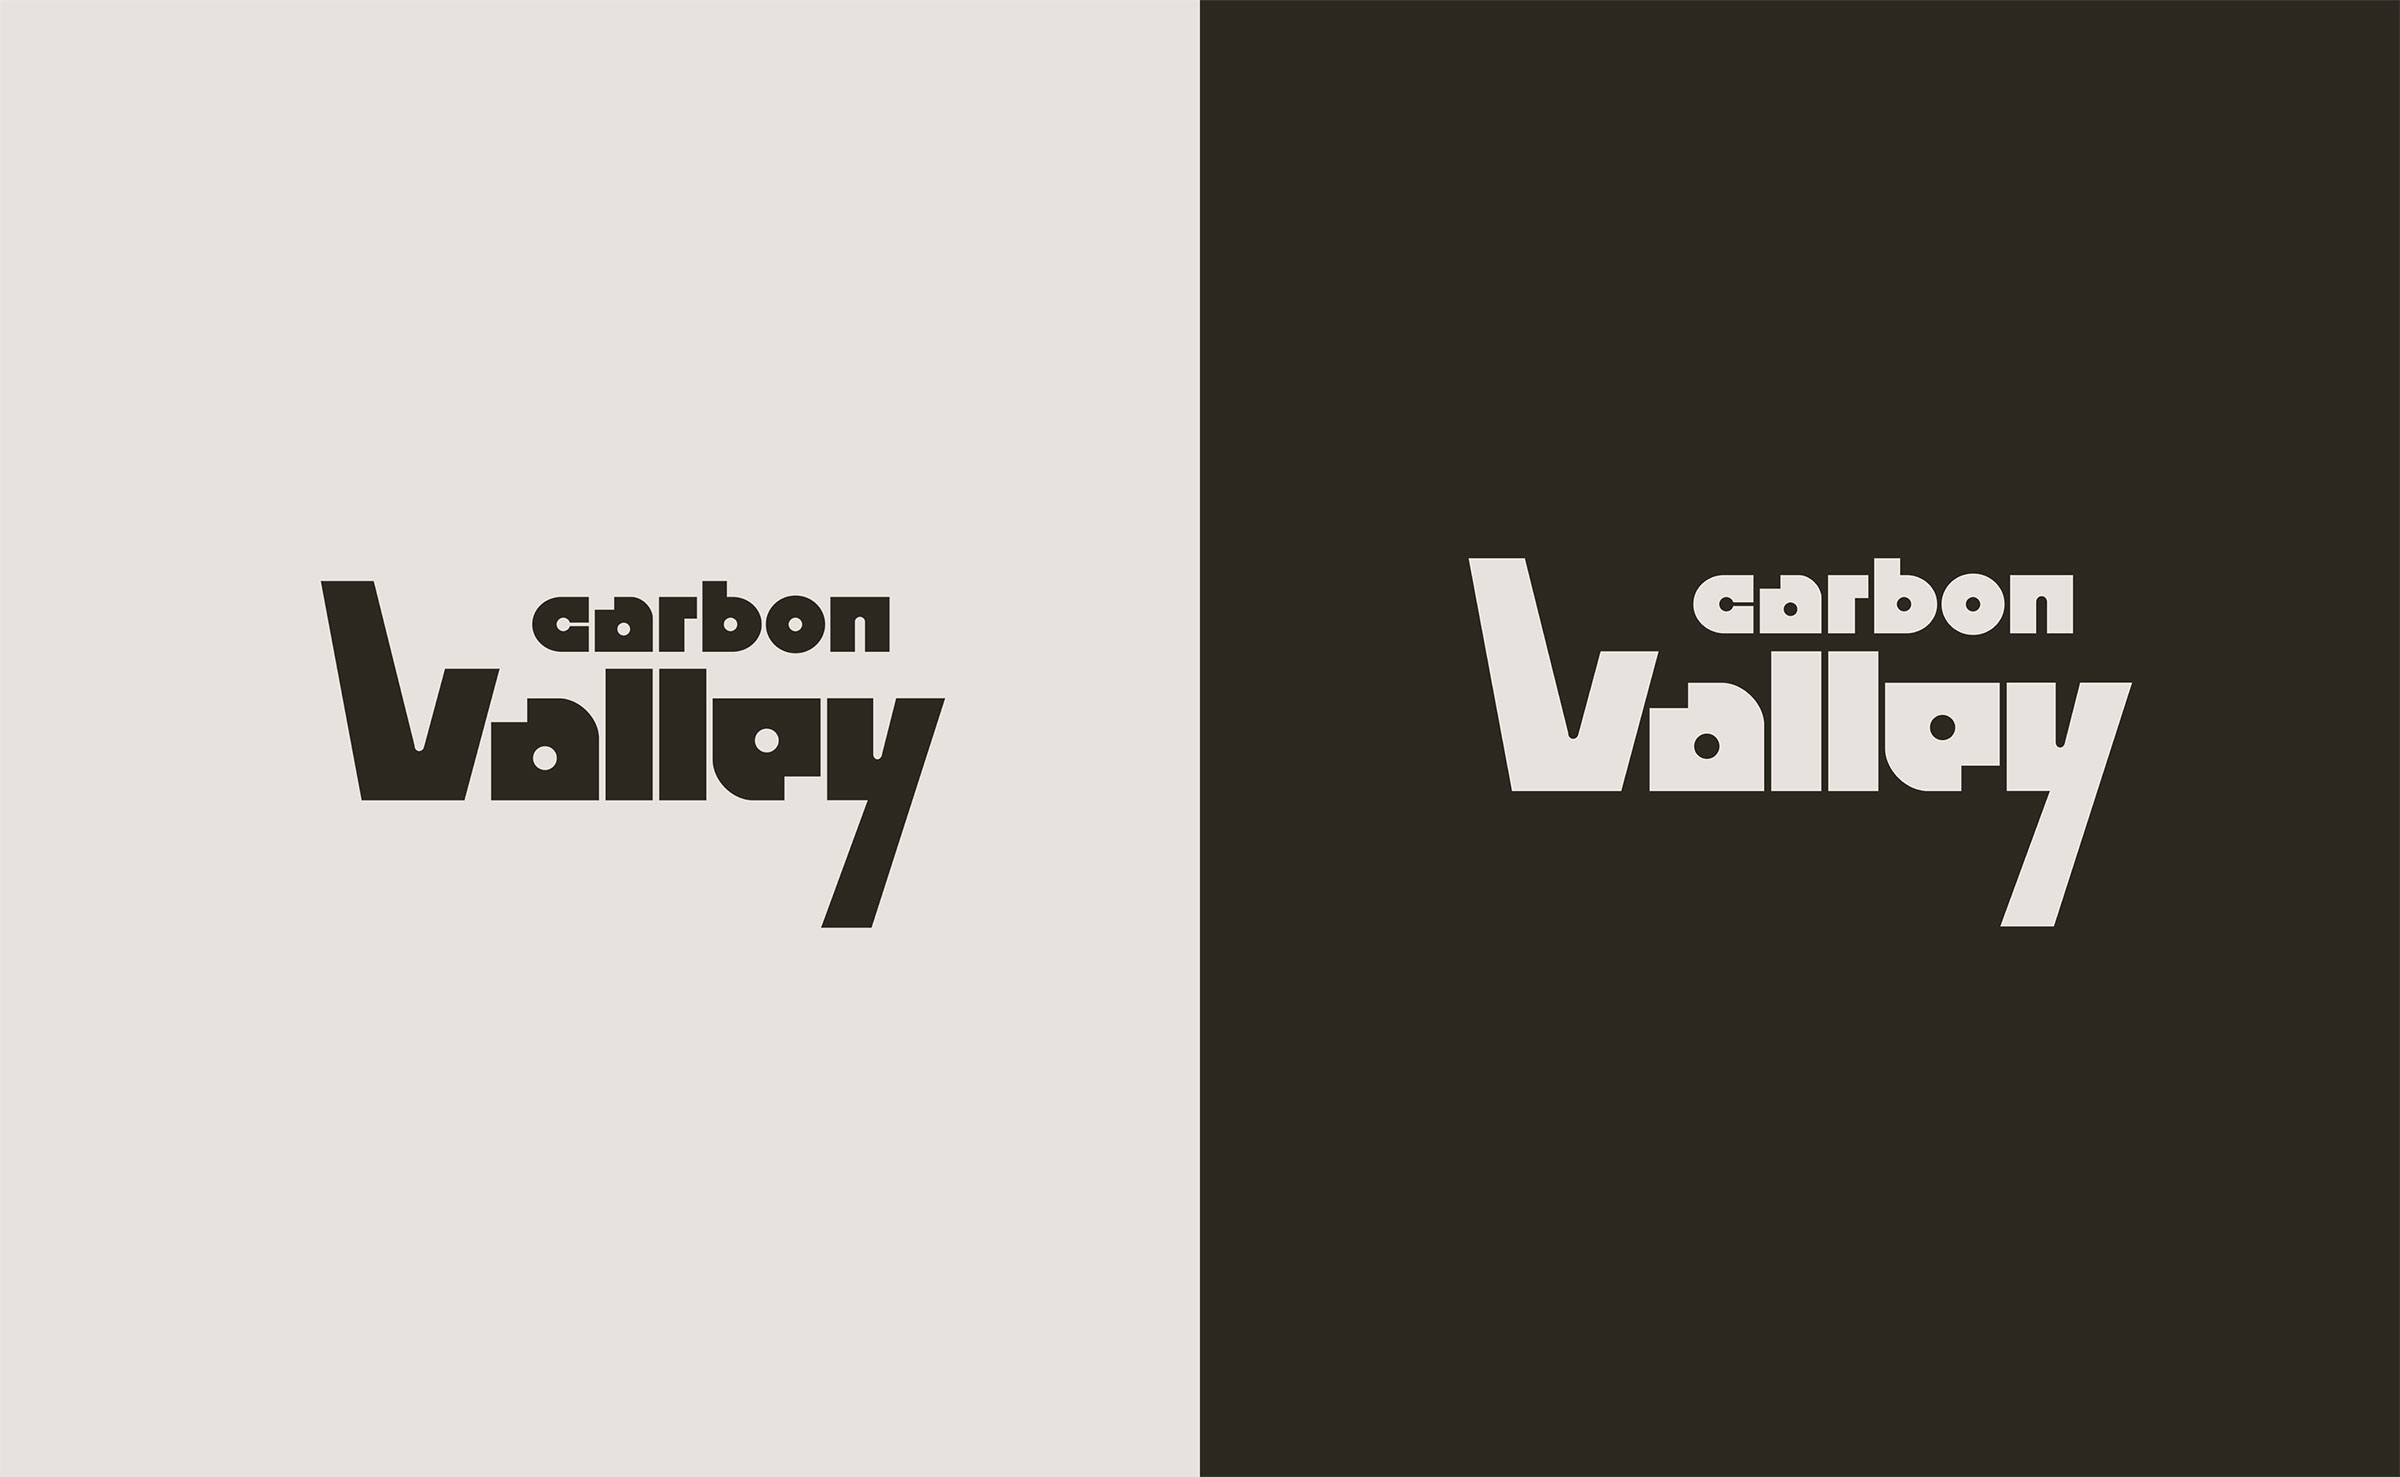 The designed logomark for Carbon Valley.